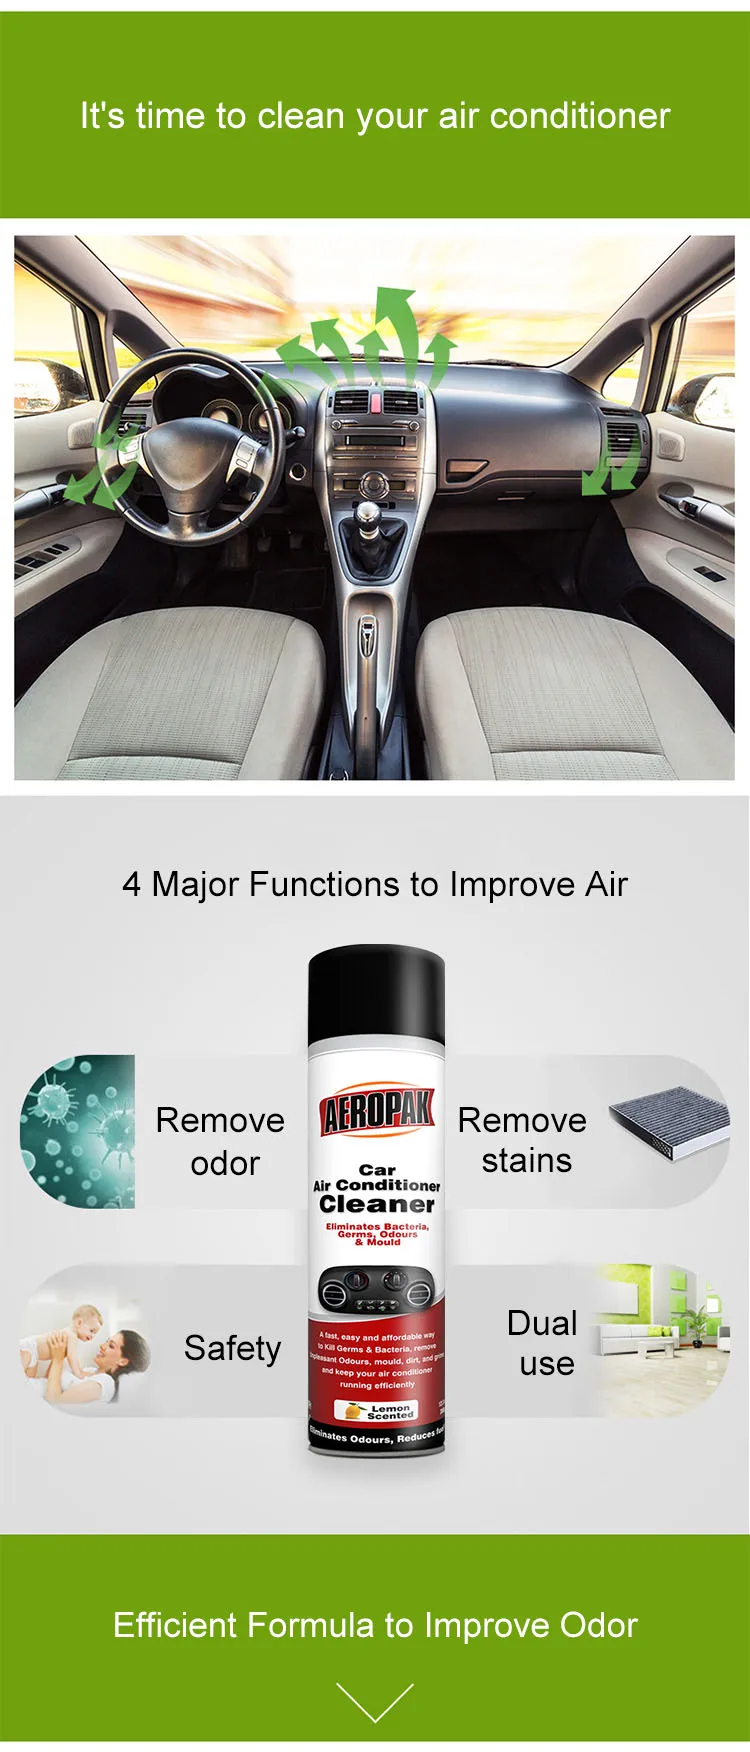 AEROPAK car interior Air Conditioner Cleaner with REACH